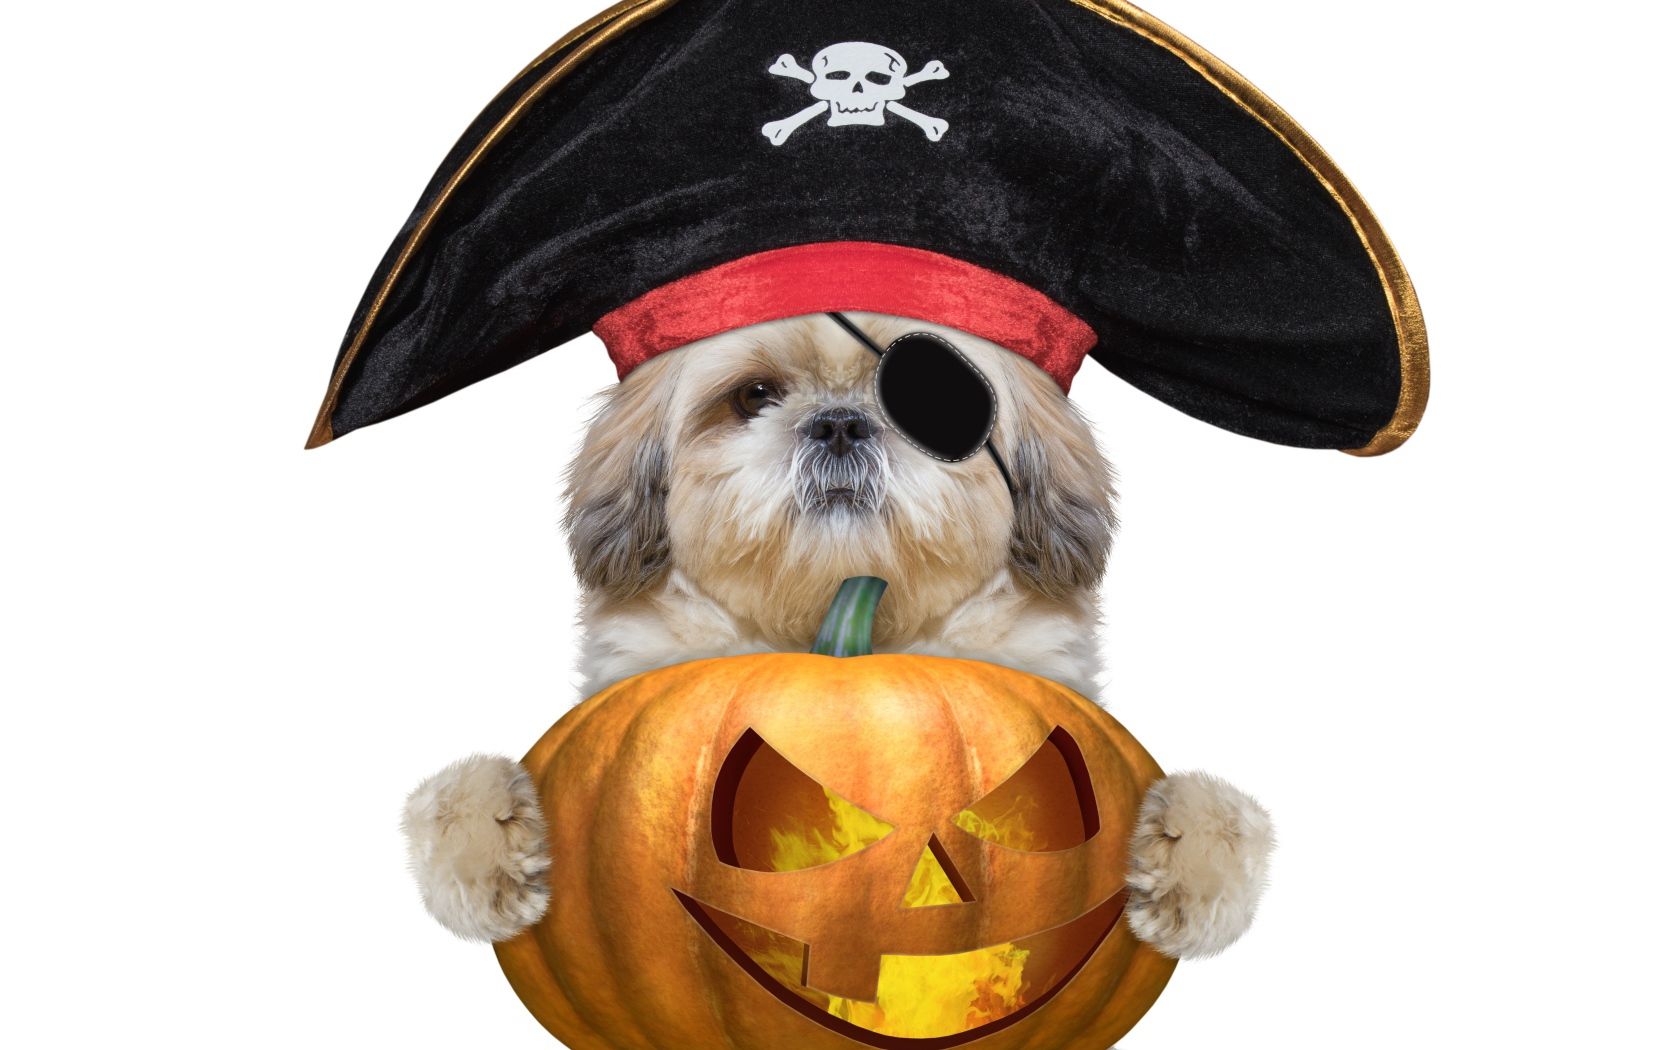 Dog in a pirate costume with a pumpkin on Halloween Desktop wallpaper 1680x1050